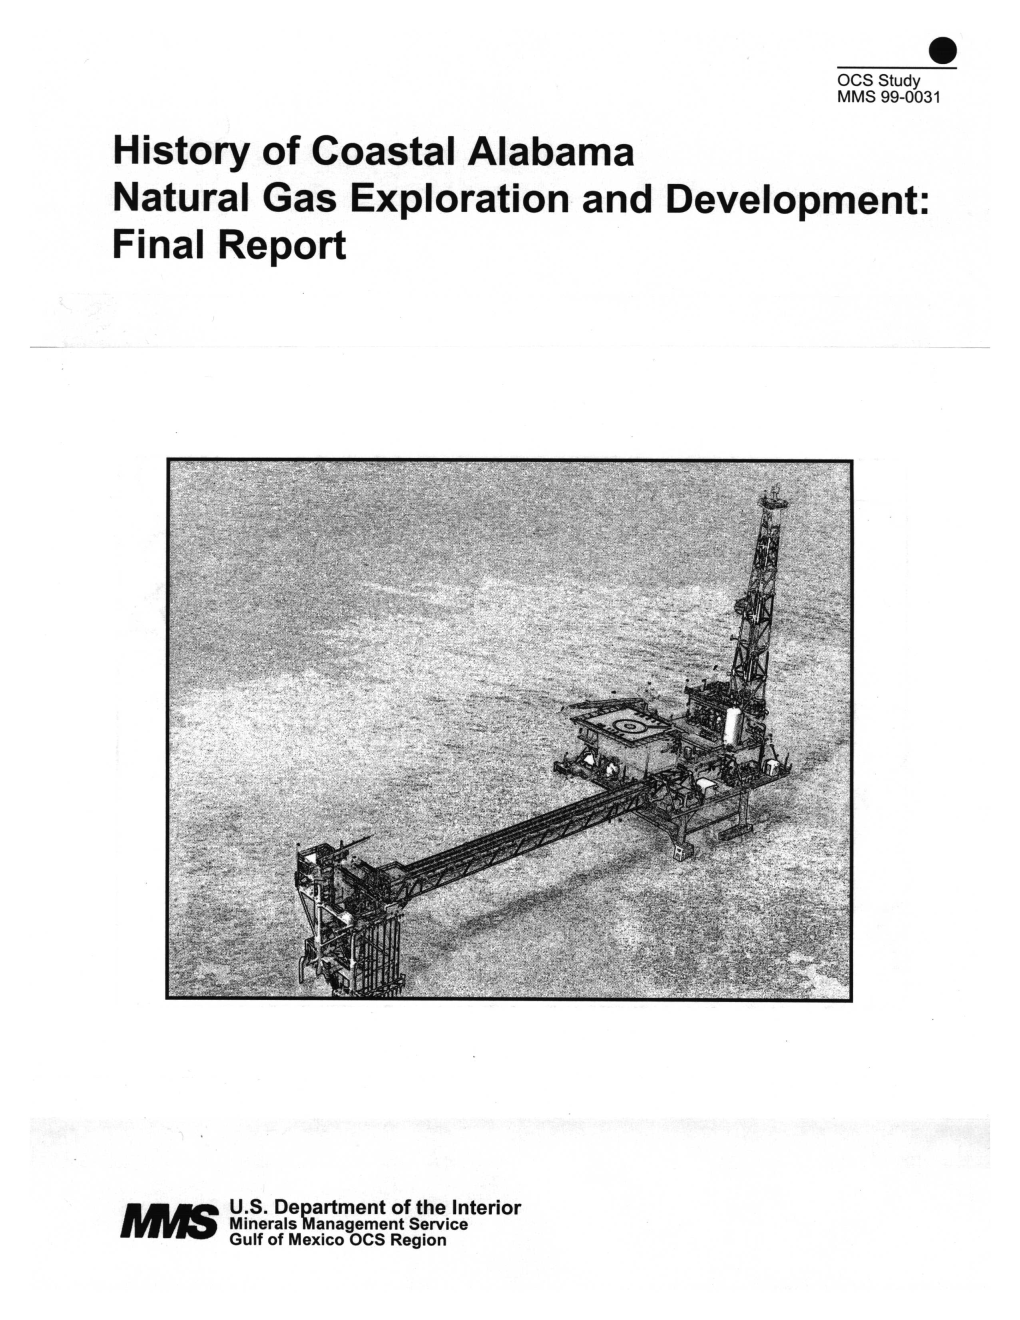 History of Coastal Alabama Natural Gas Exploration and Development : Final Report